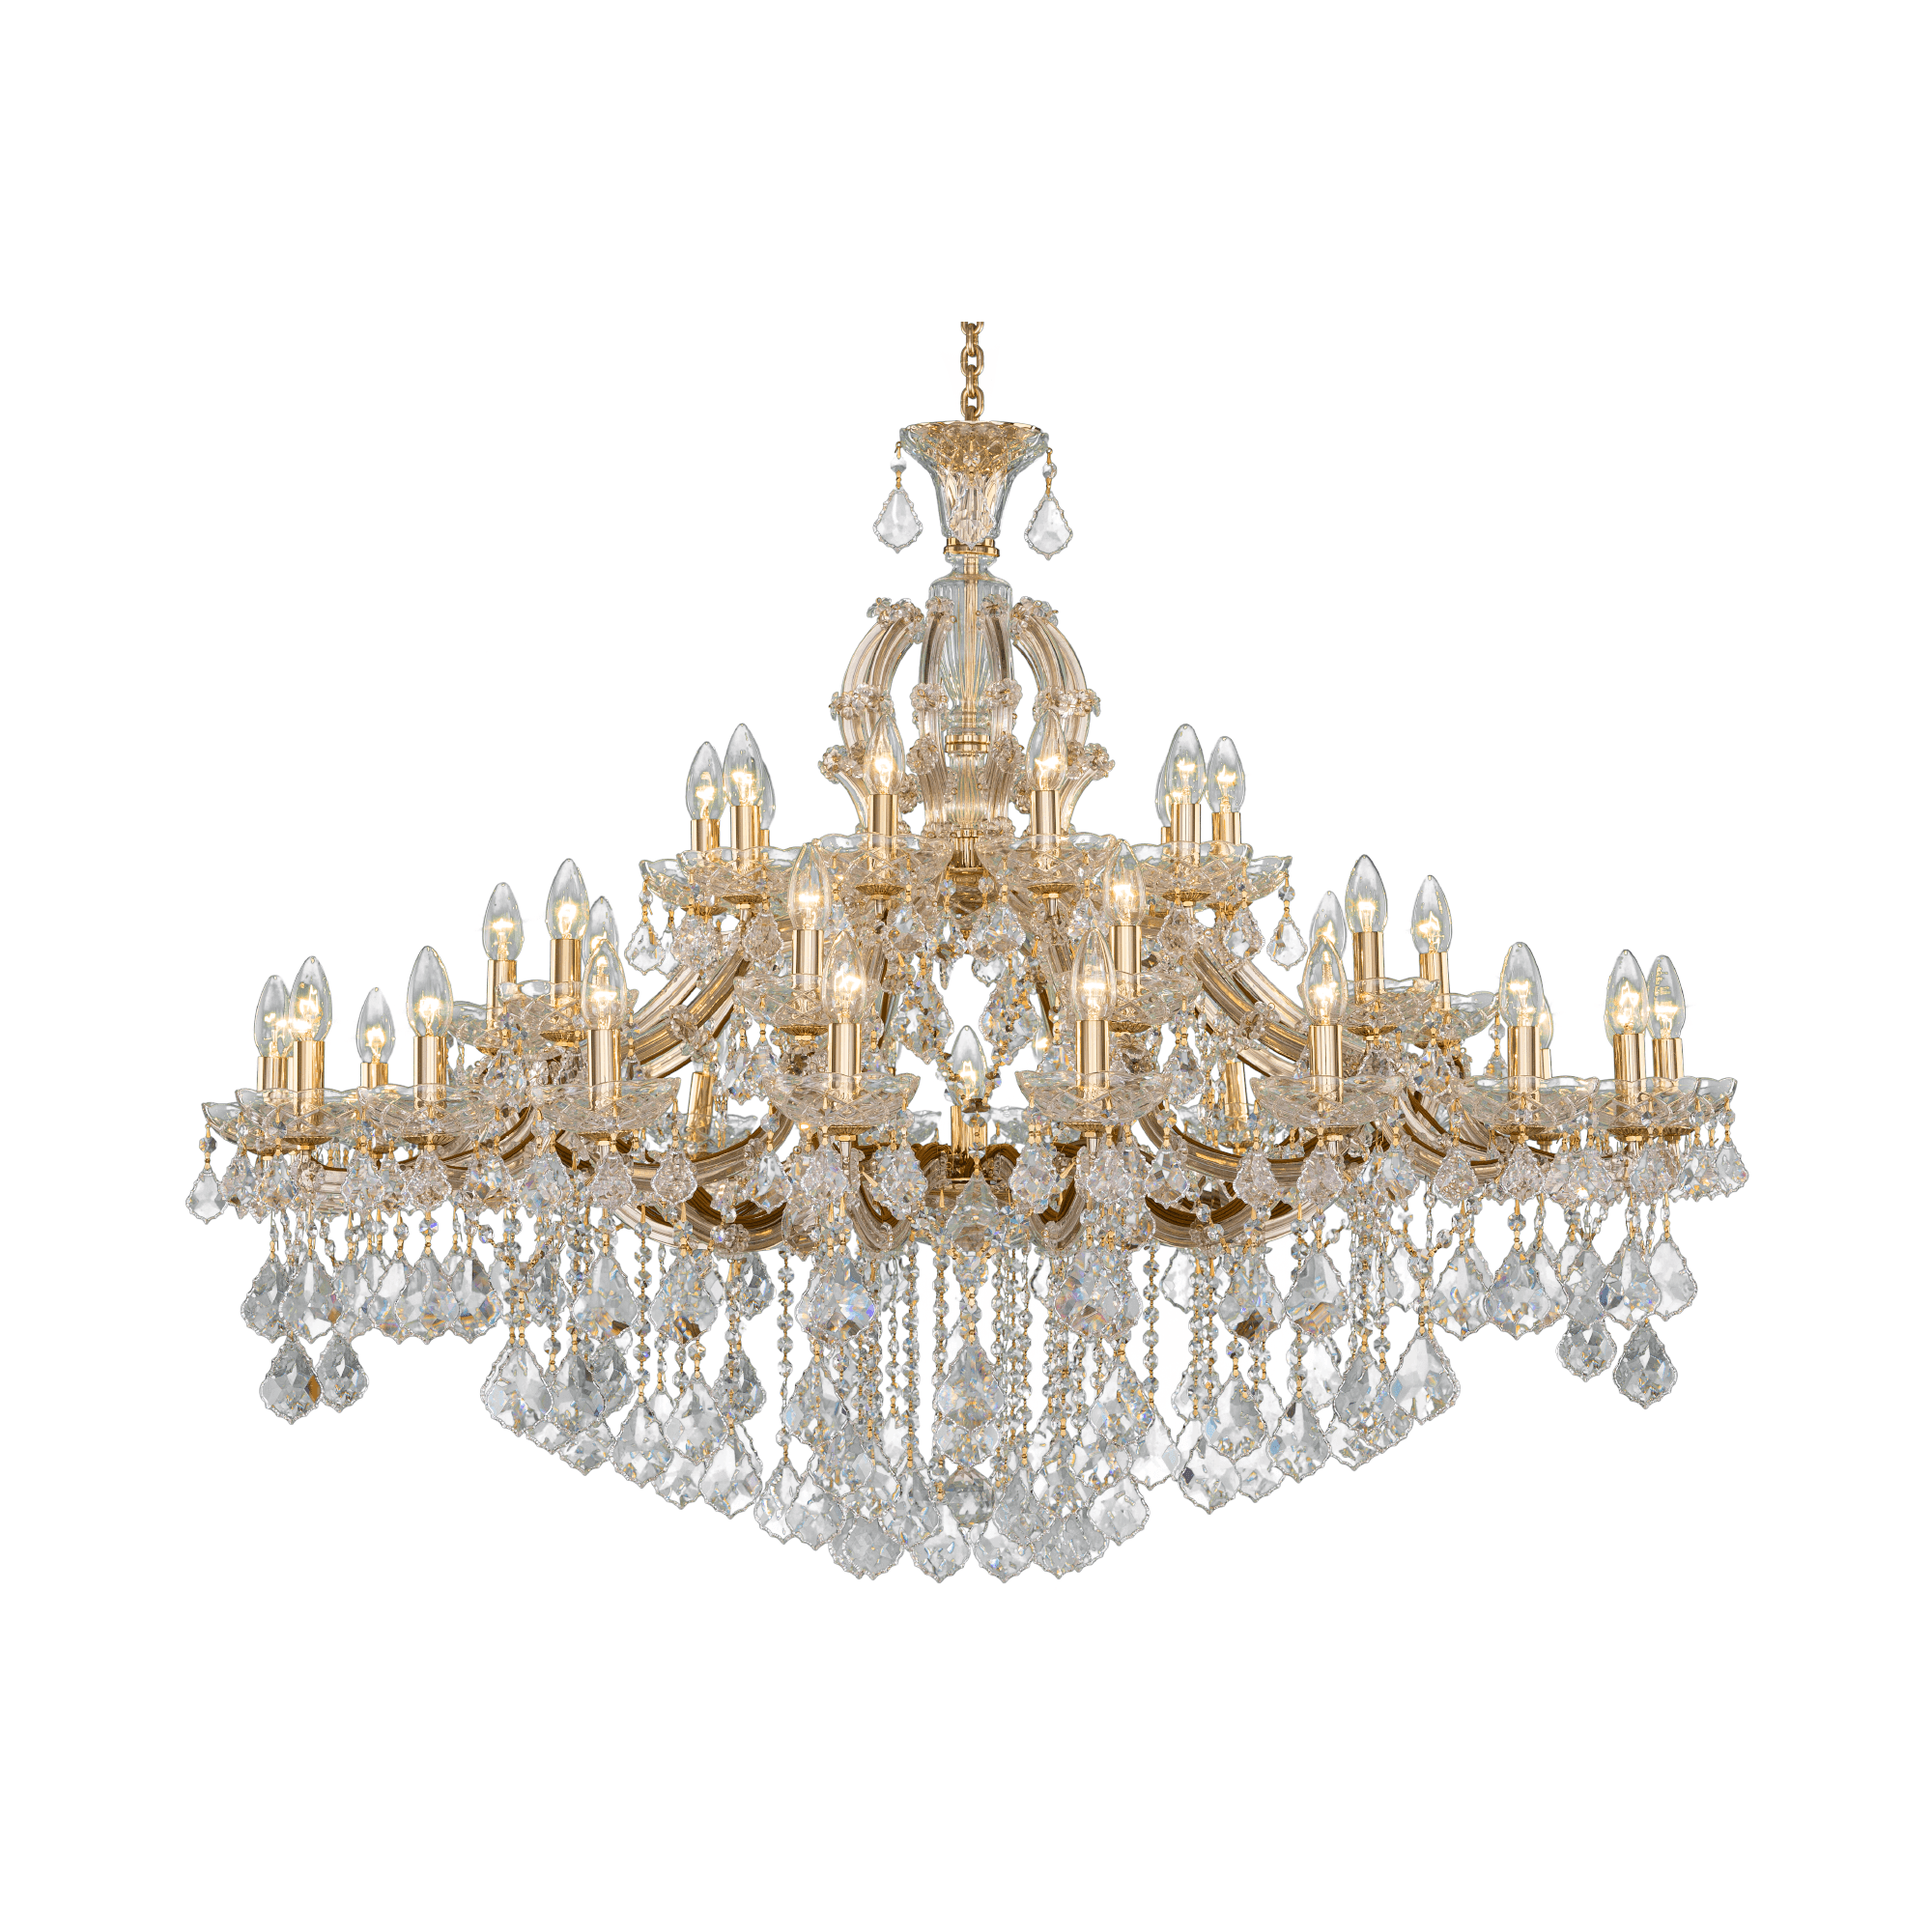 Asfour-Crystal-Lighting-Maria-Theresa-Collection-Maria-Theresa-Chandelier-41-Bulbs-Gold